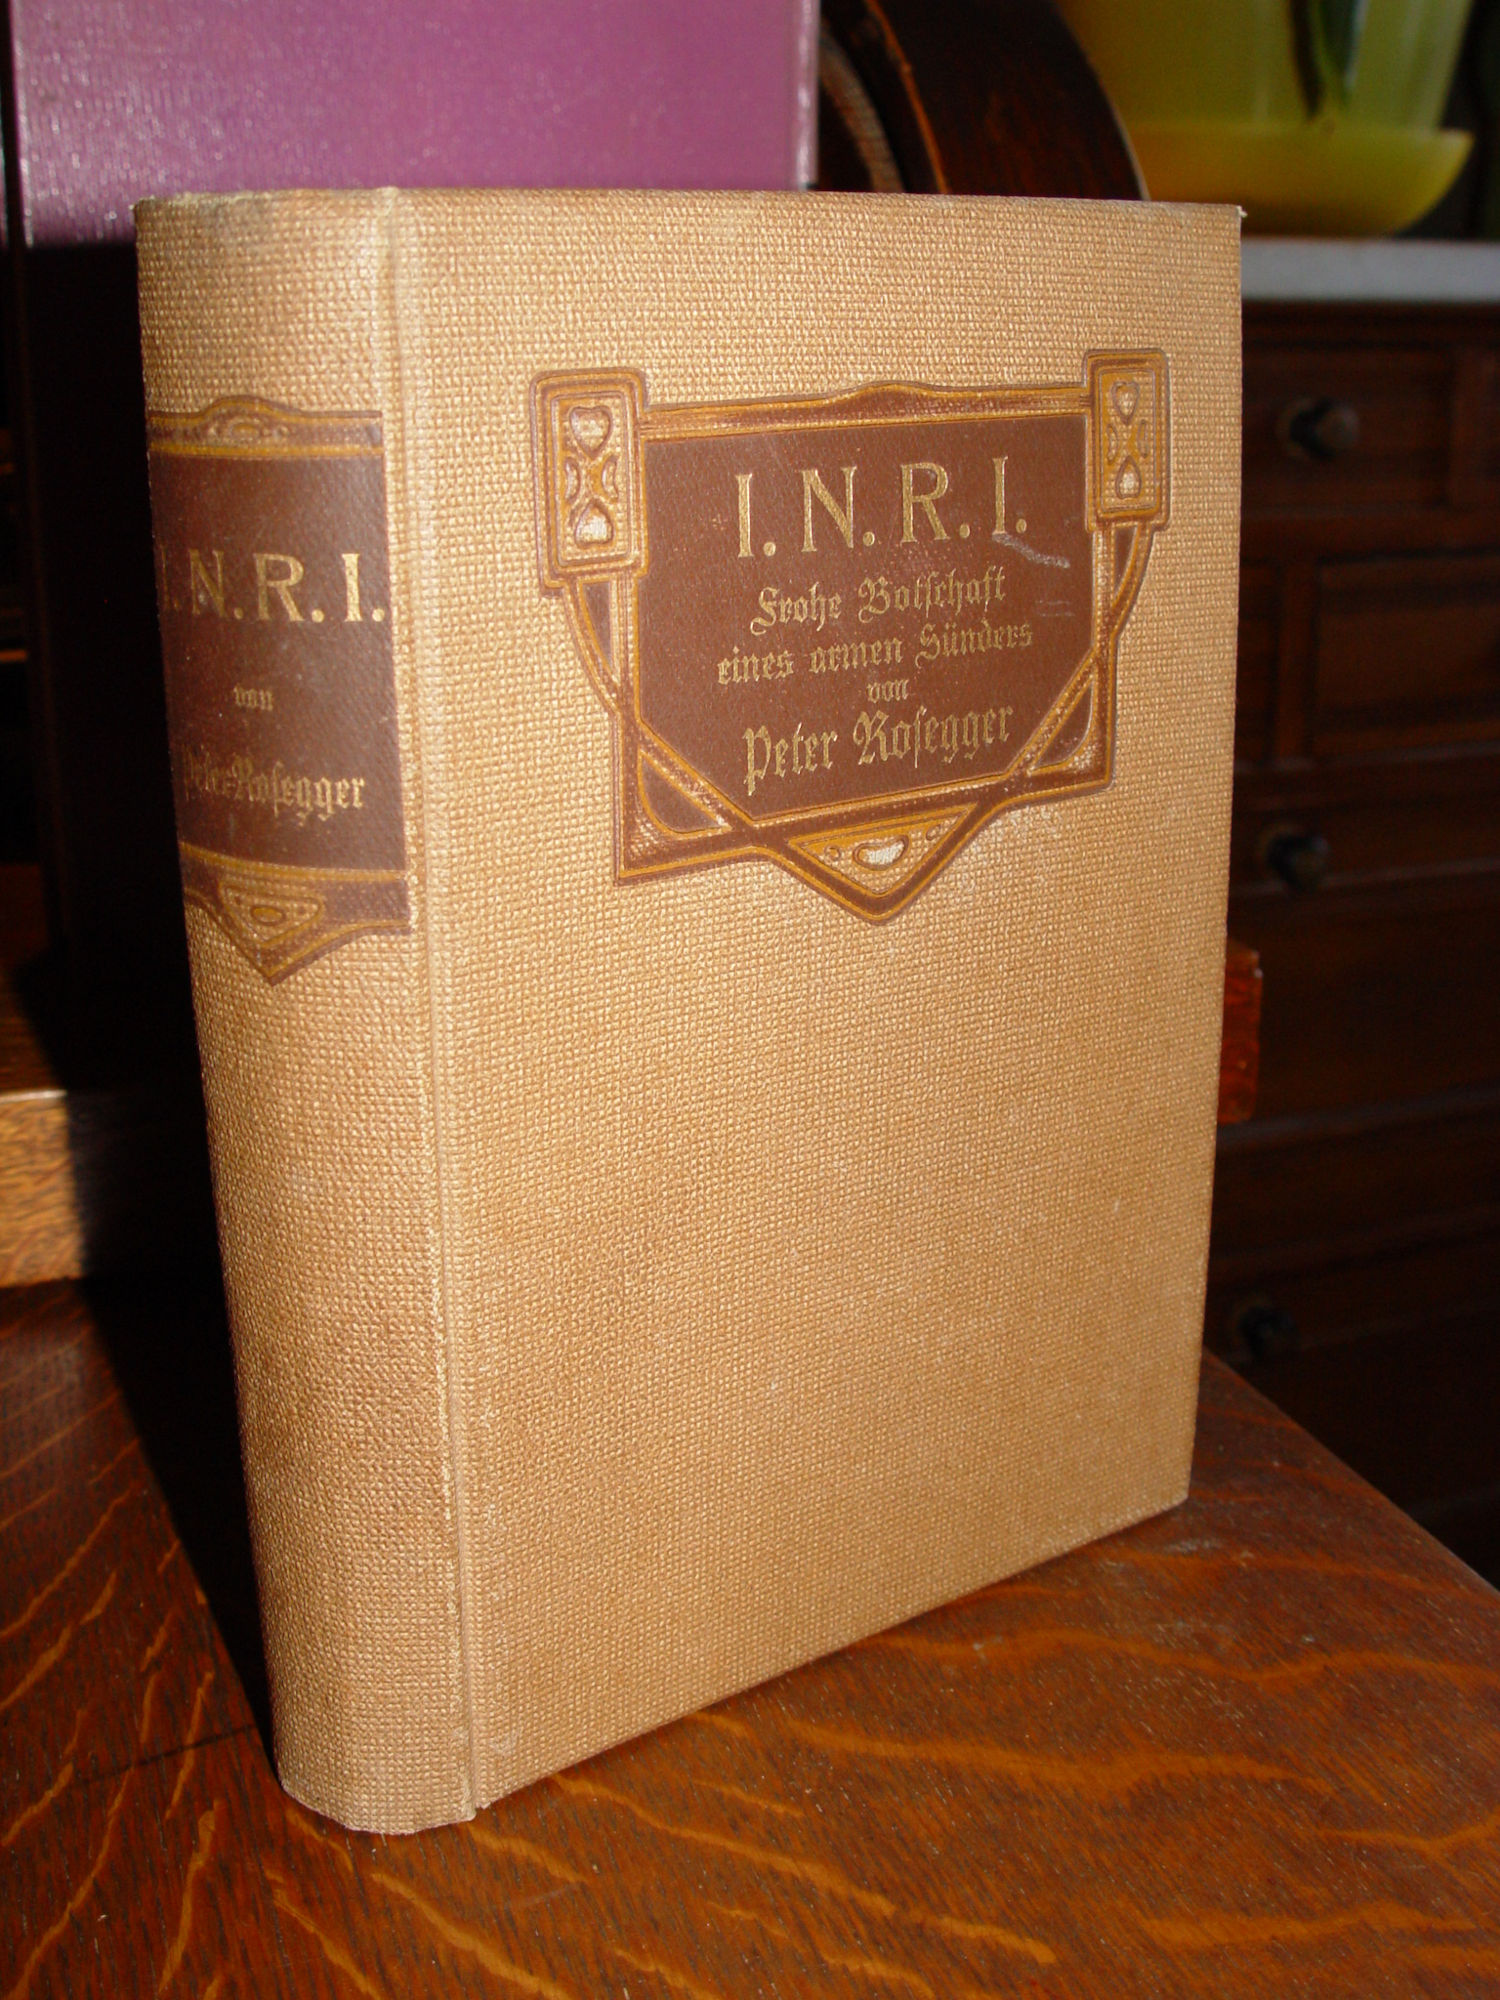 I. N. R. I. Frohe Botschaft eines armen
                        Sünders 1905 by Peter Rosegger